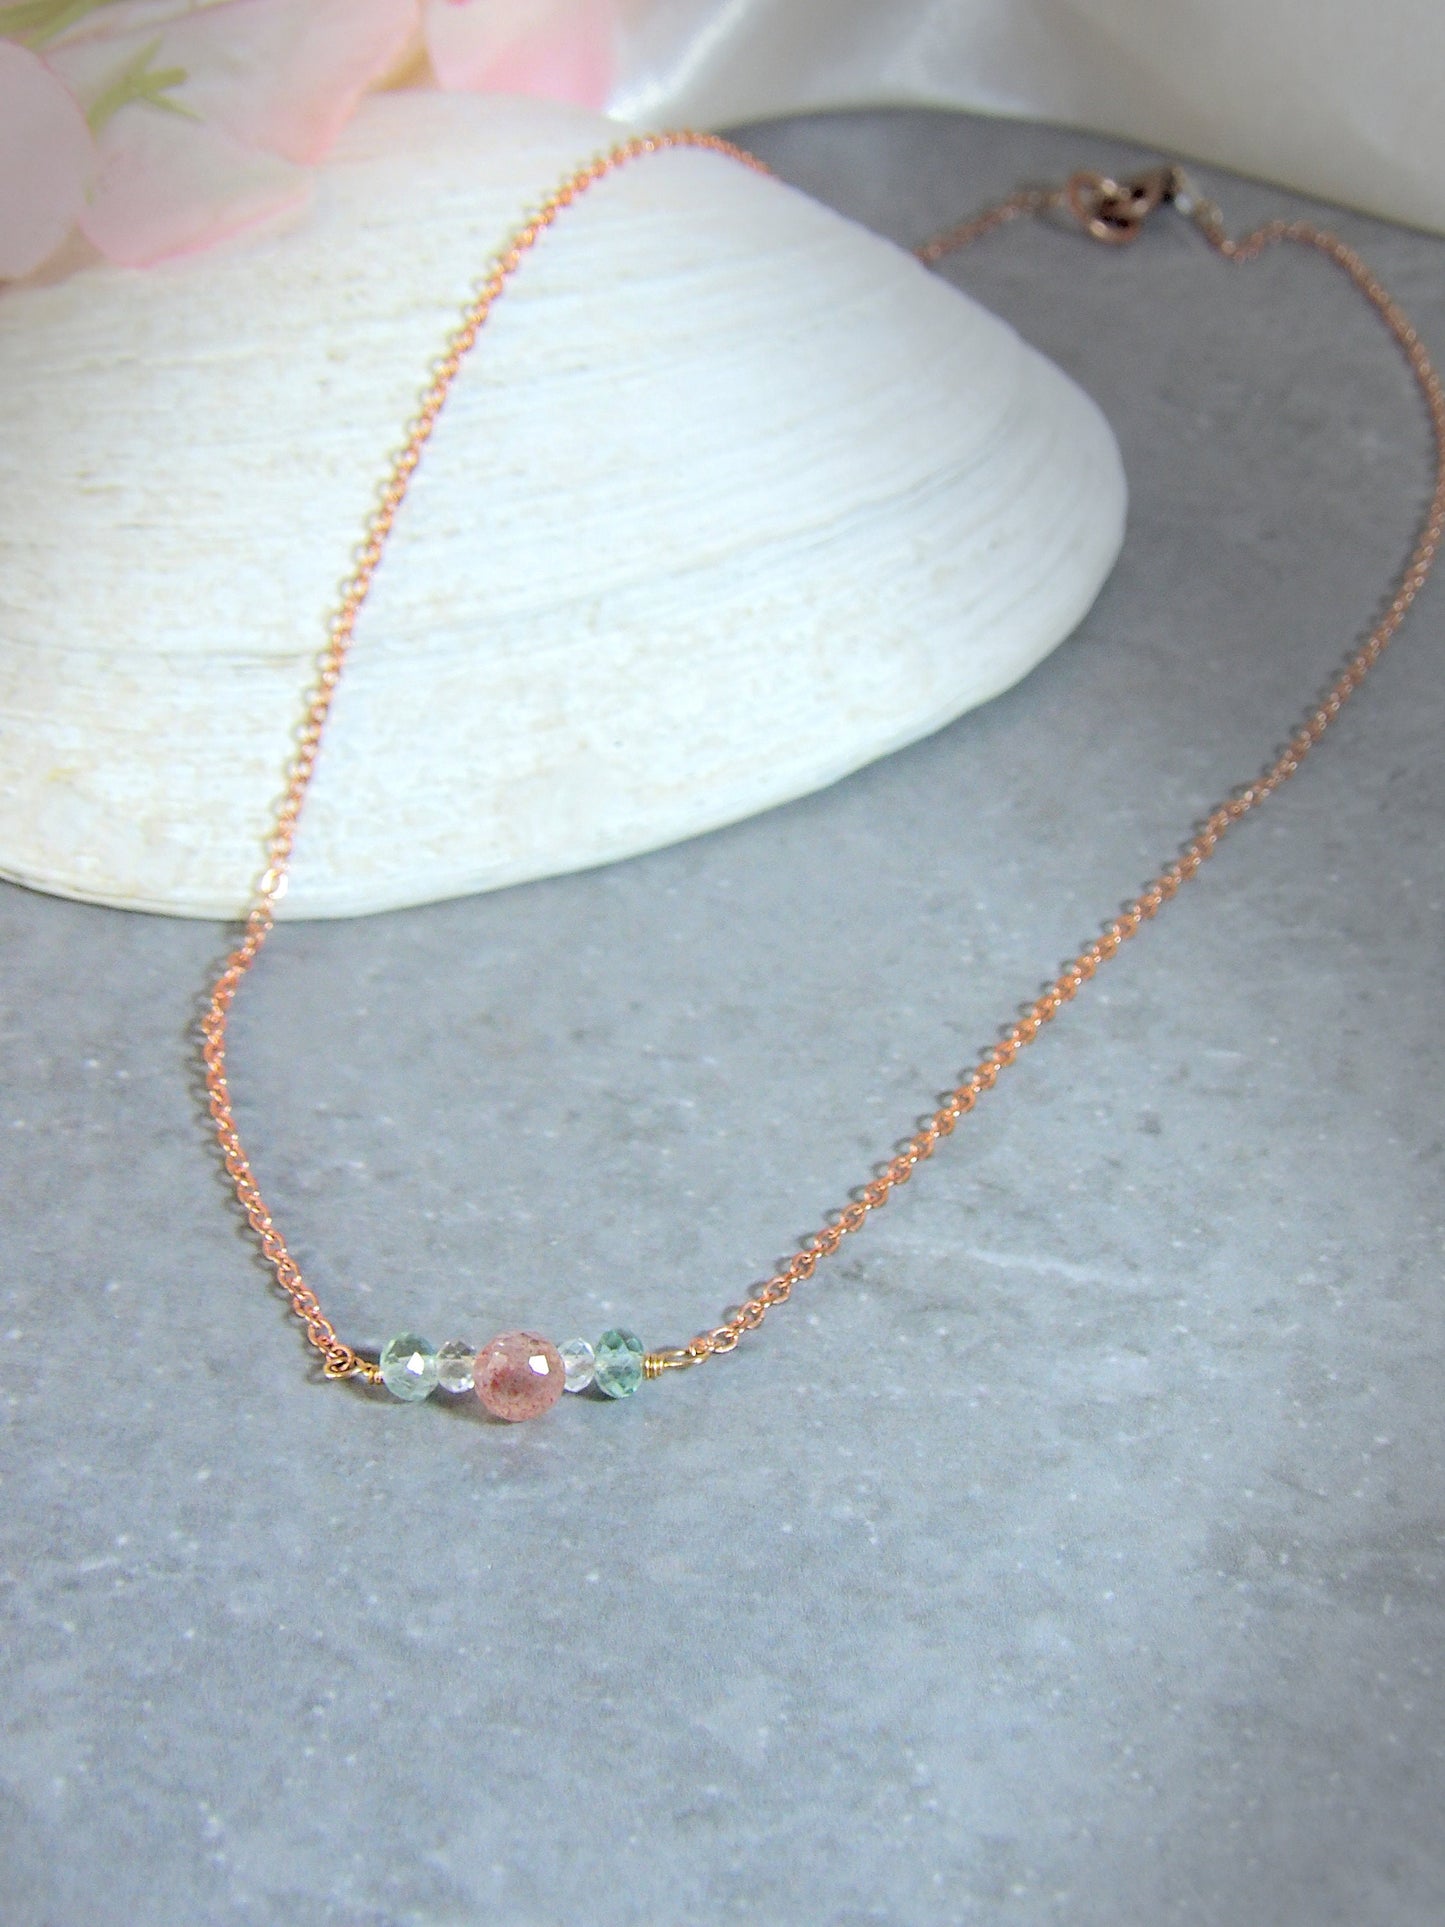 strawberry quartz fluorite white topaz dainty boho chic necklace 1